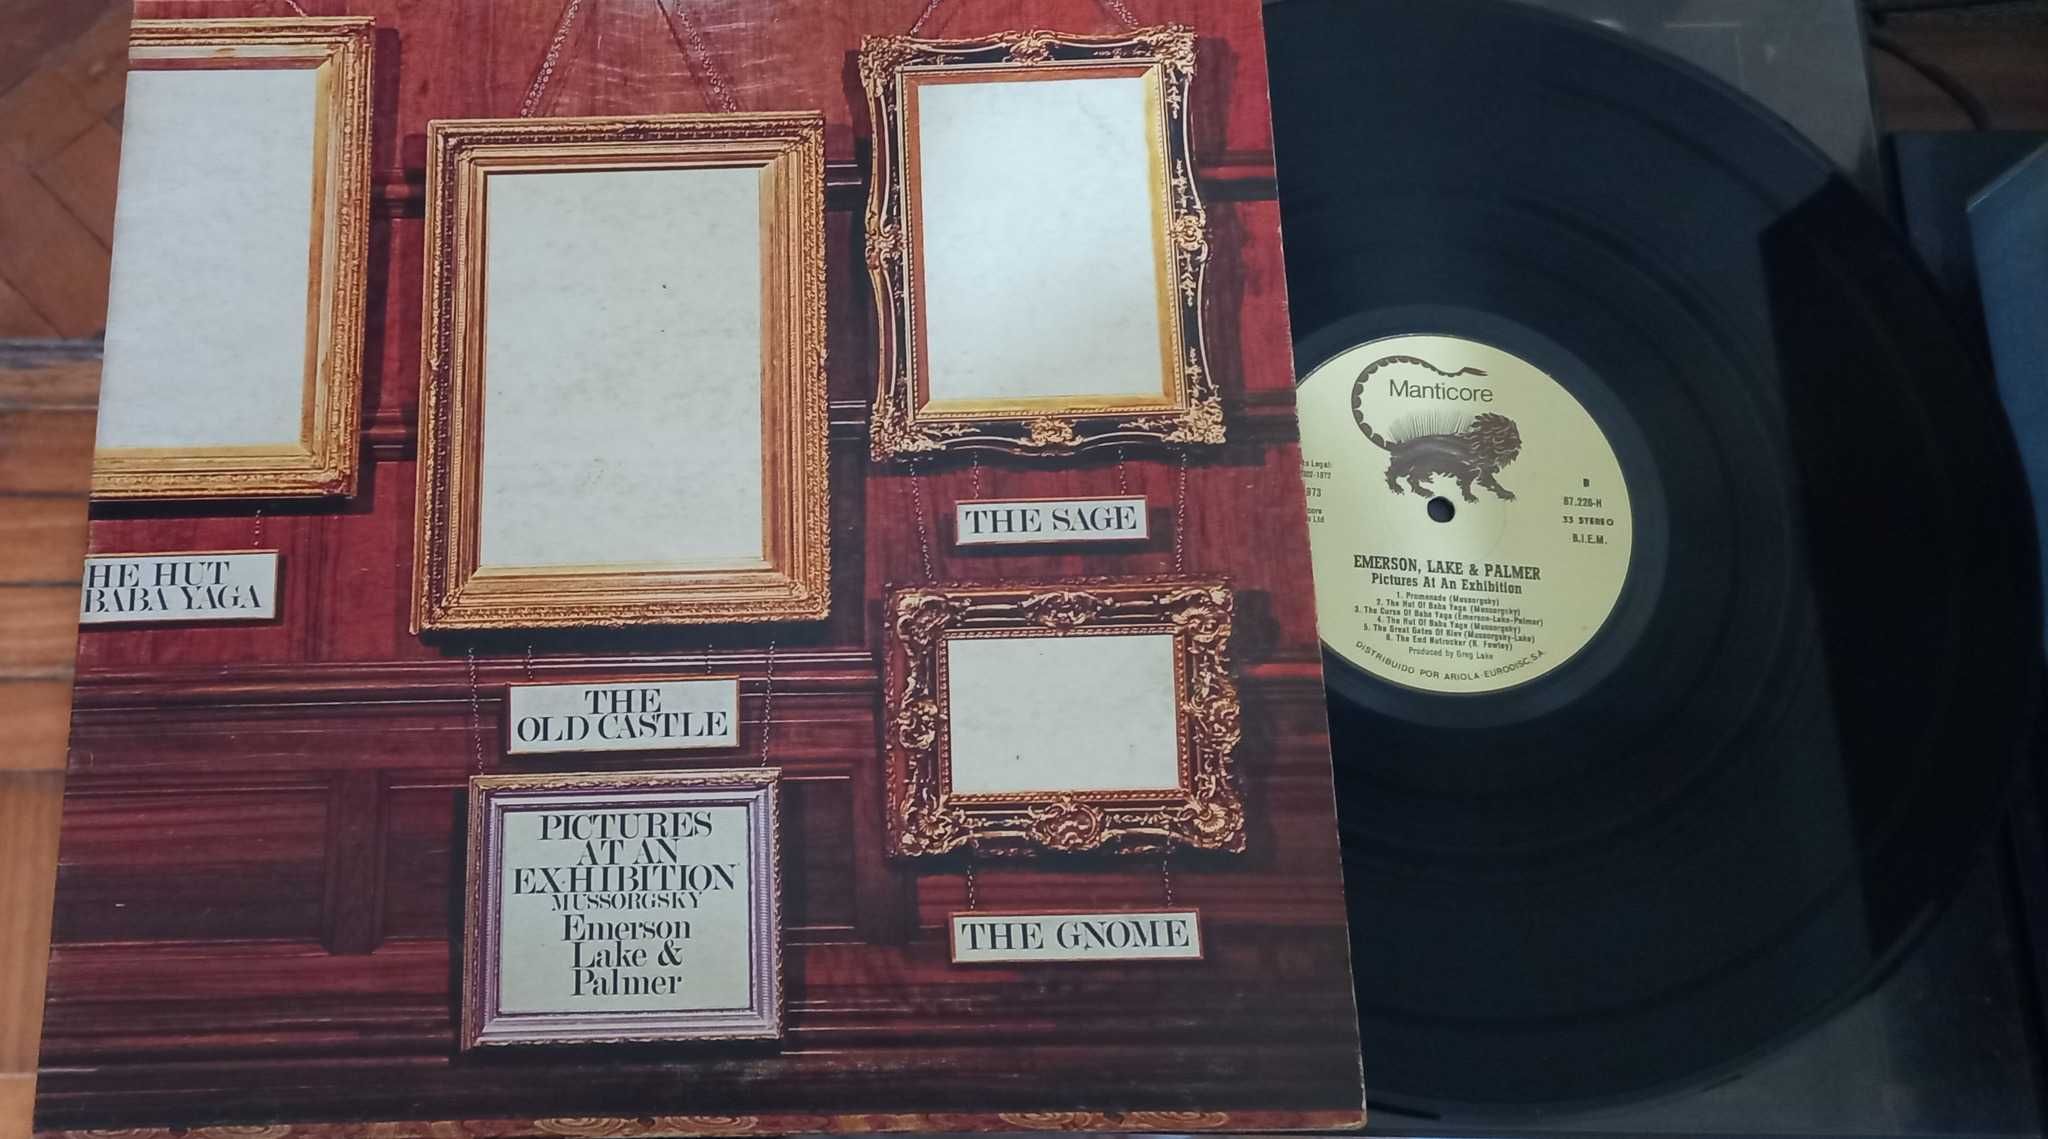 Emerson, Lake & Palmer - Pictures At An Exibition LP - 1973 - Gatefold